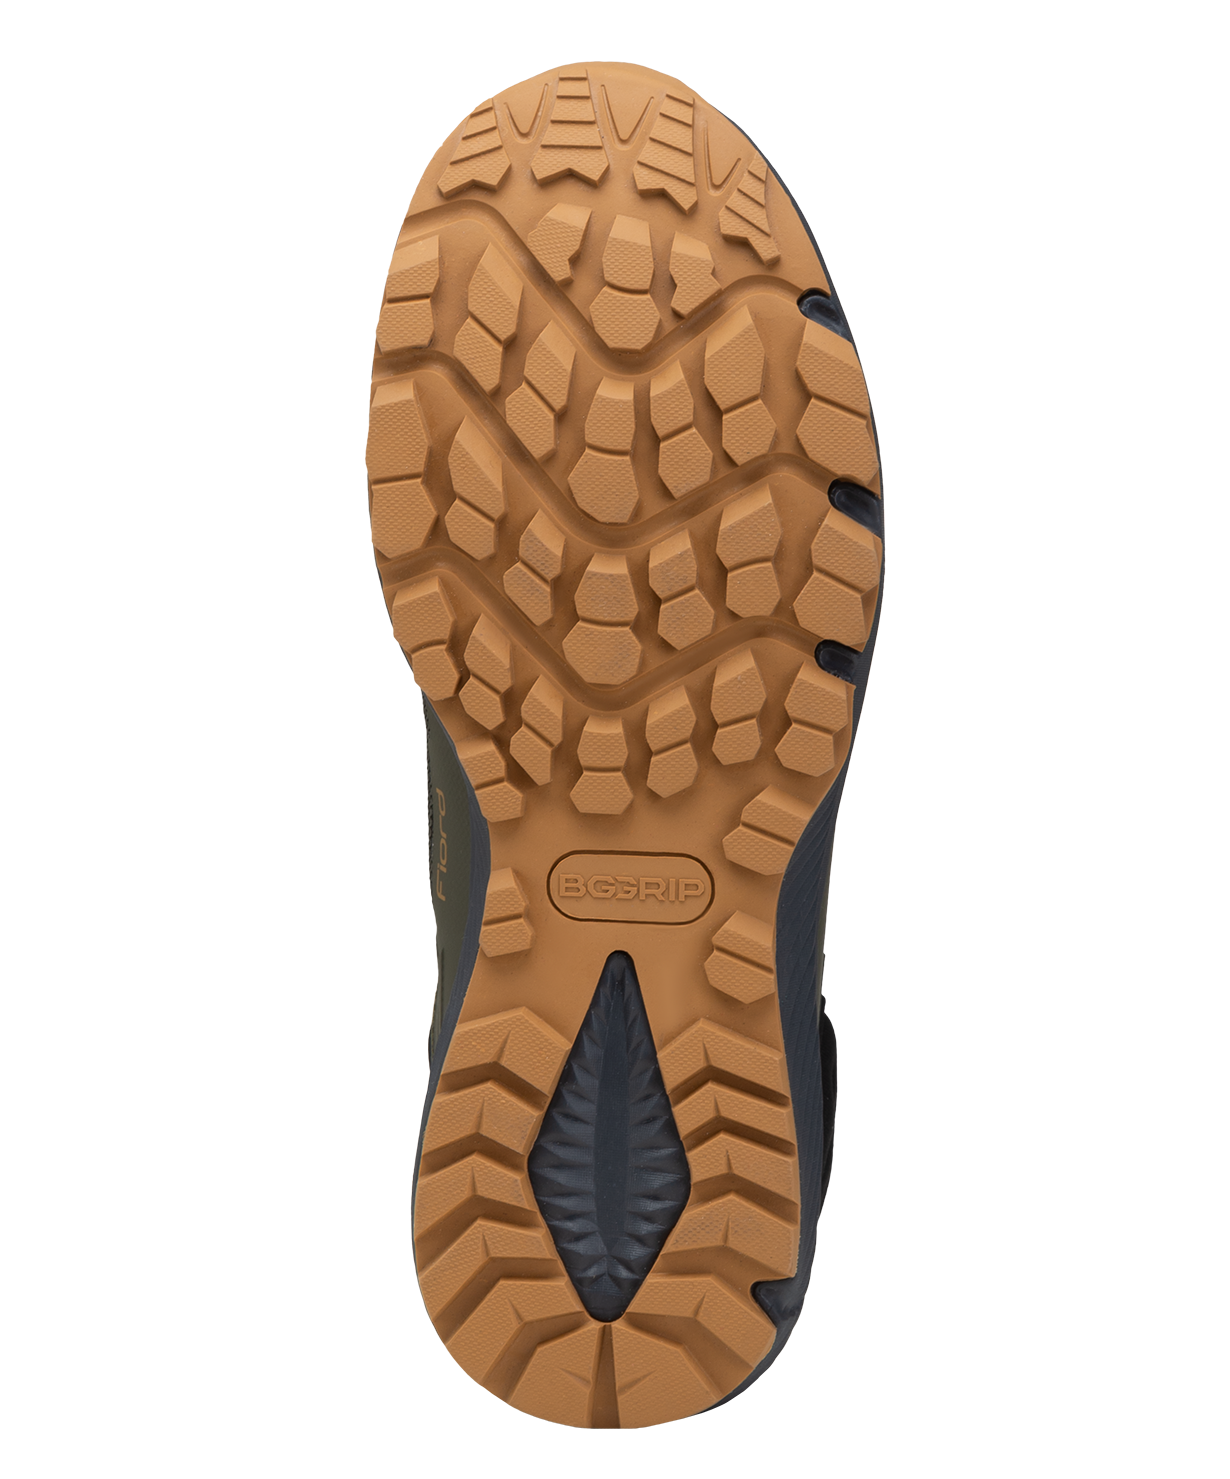 Ботинки Berger Fiord Waterproof, хаки/черный, мужской, р. 39-45 размер 42